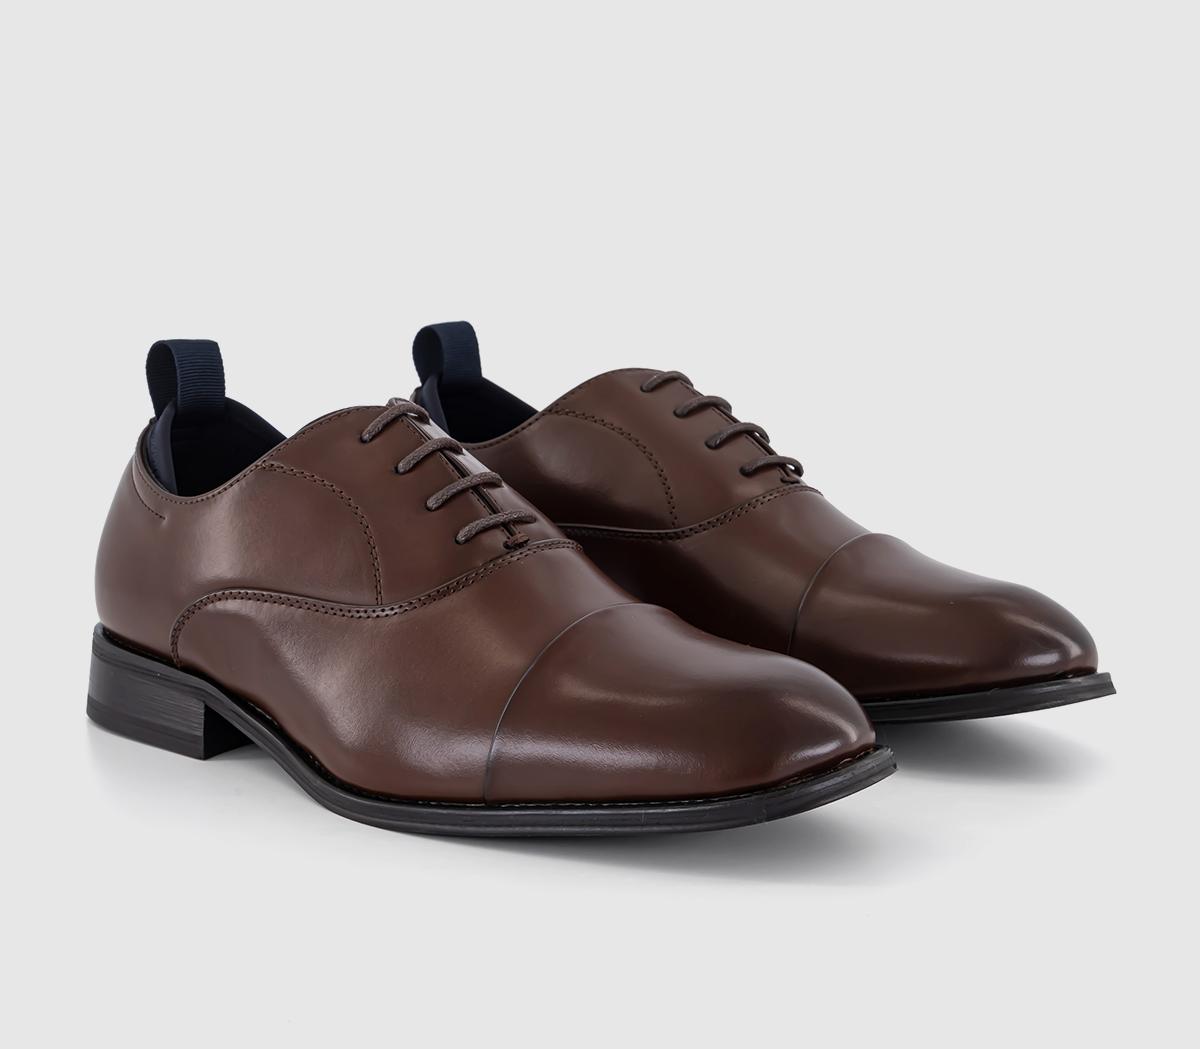 OFFICE Mason Neoprene Detail Comfort Oxford Shoes Chocolate - Men’s ...